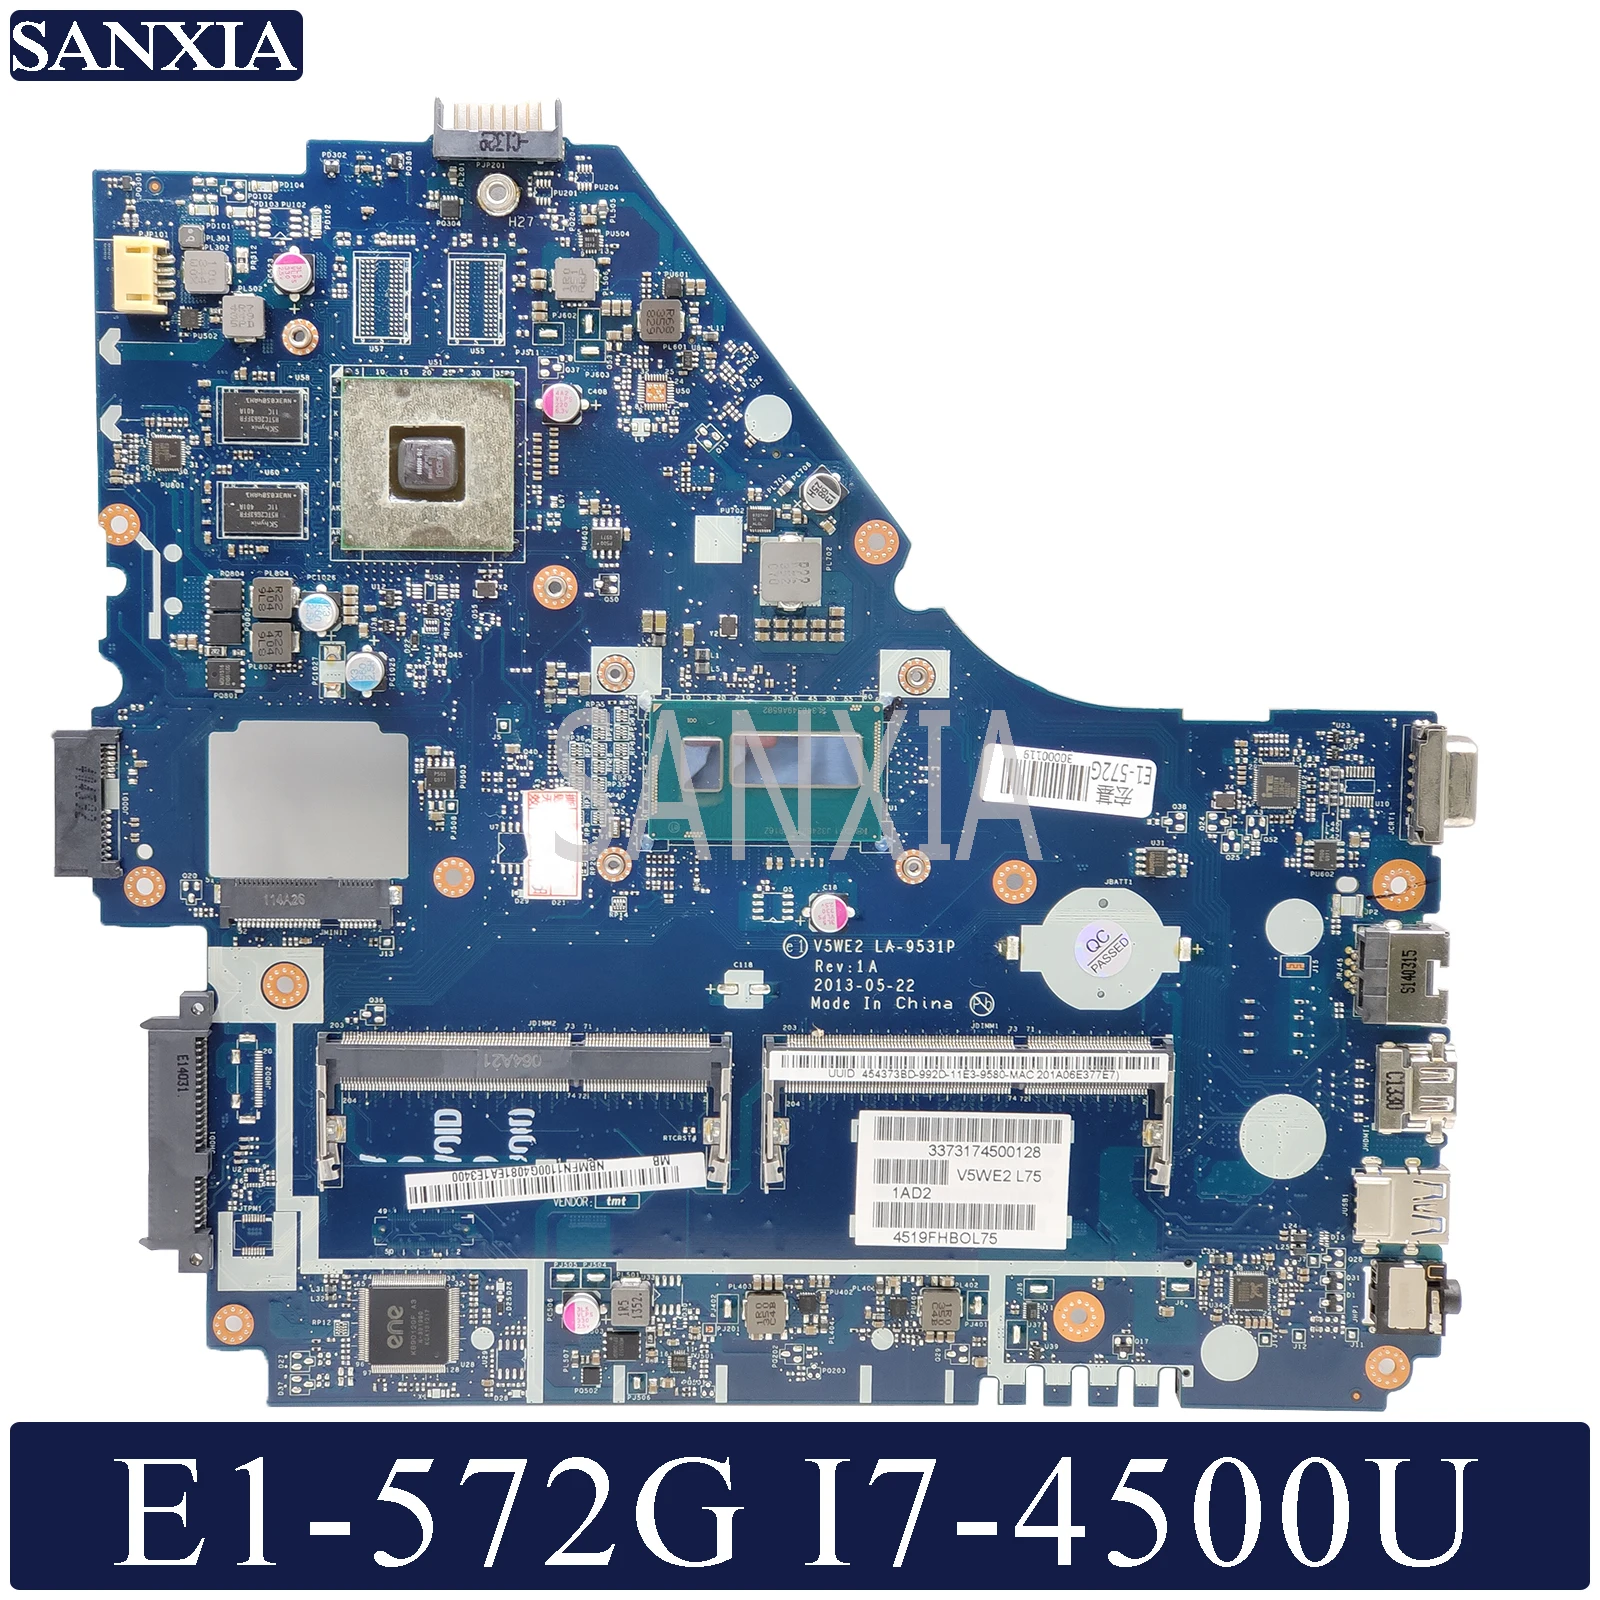 90% OFF  KEFU LA-9531P Laptop motherboard for Acer E1-572G original mainboard I7-4500U with video card